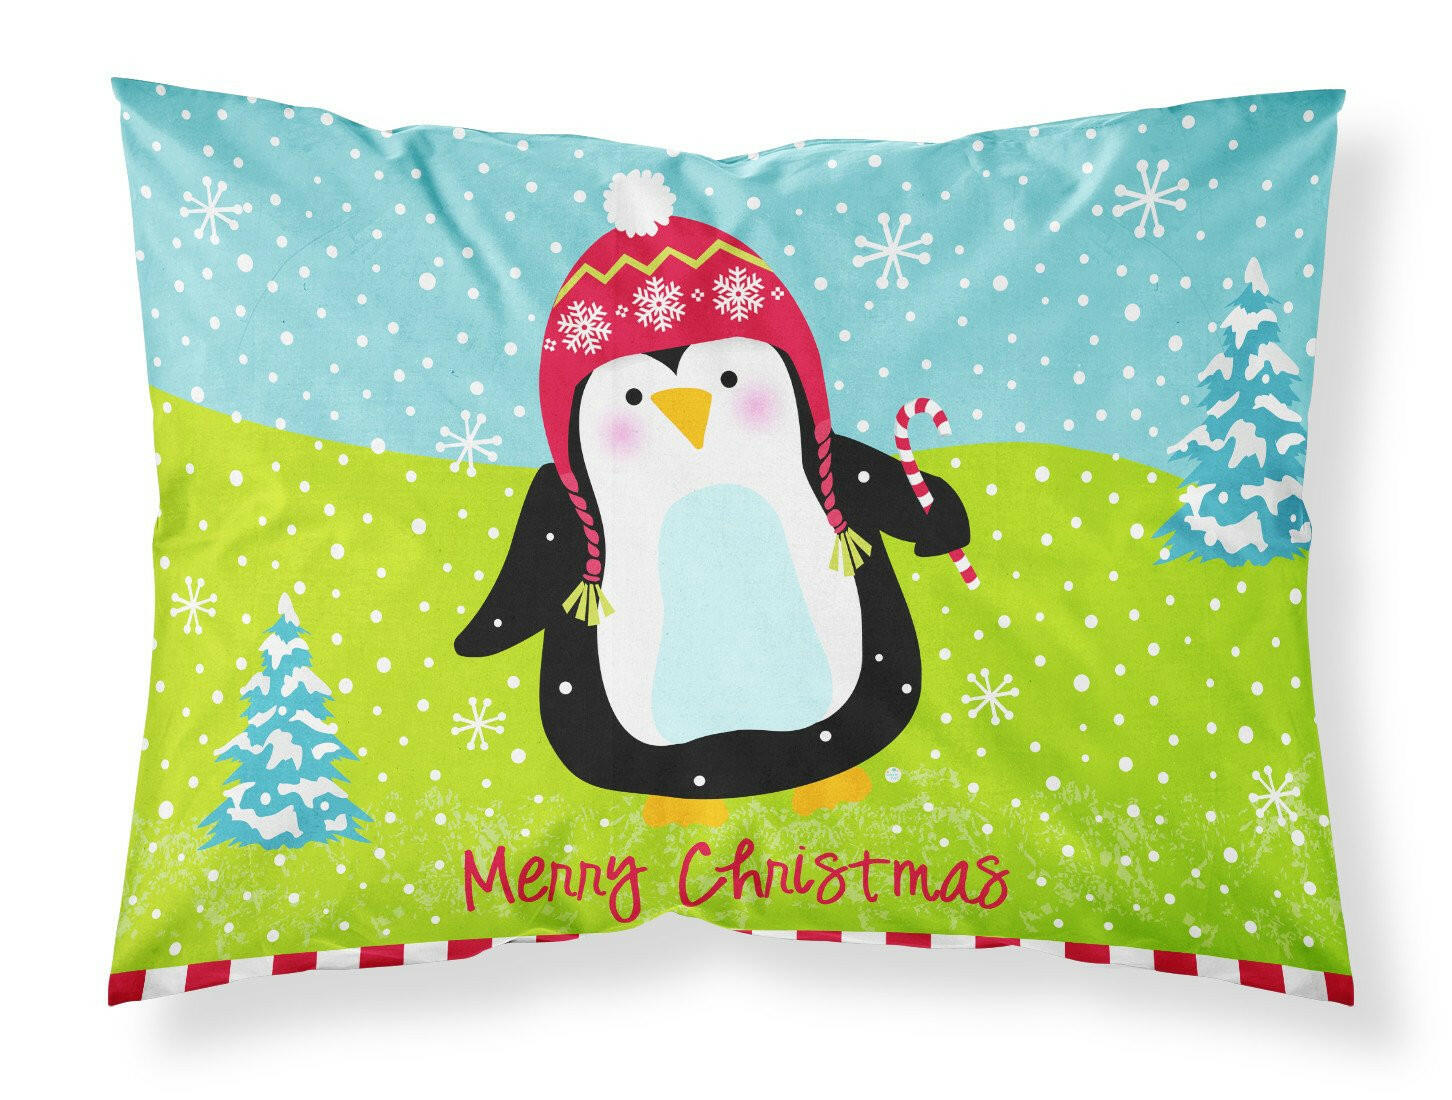 Merry Christmas Happy Penguin Fabric Standard Pillowcase VHA3015PILLOWCASE by Caroline's Treasures